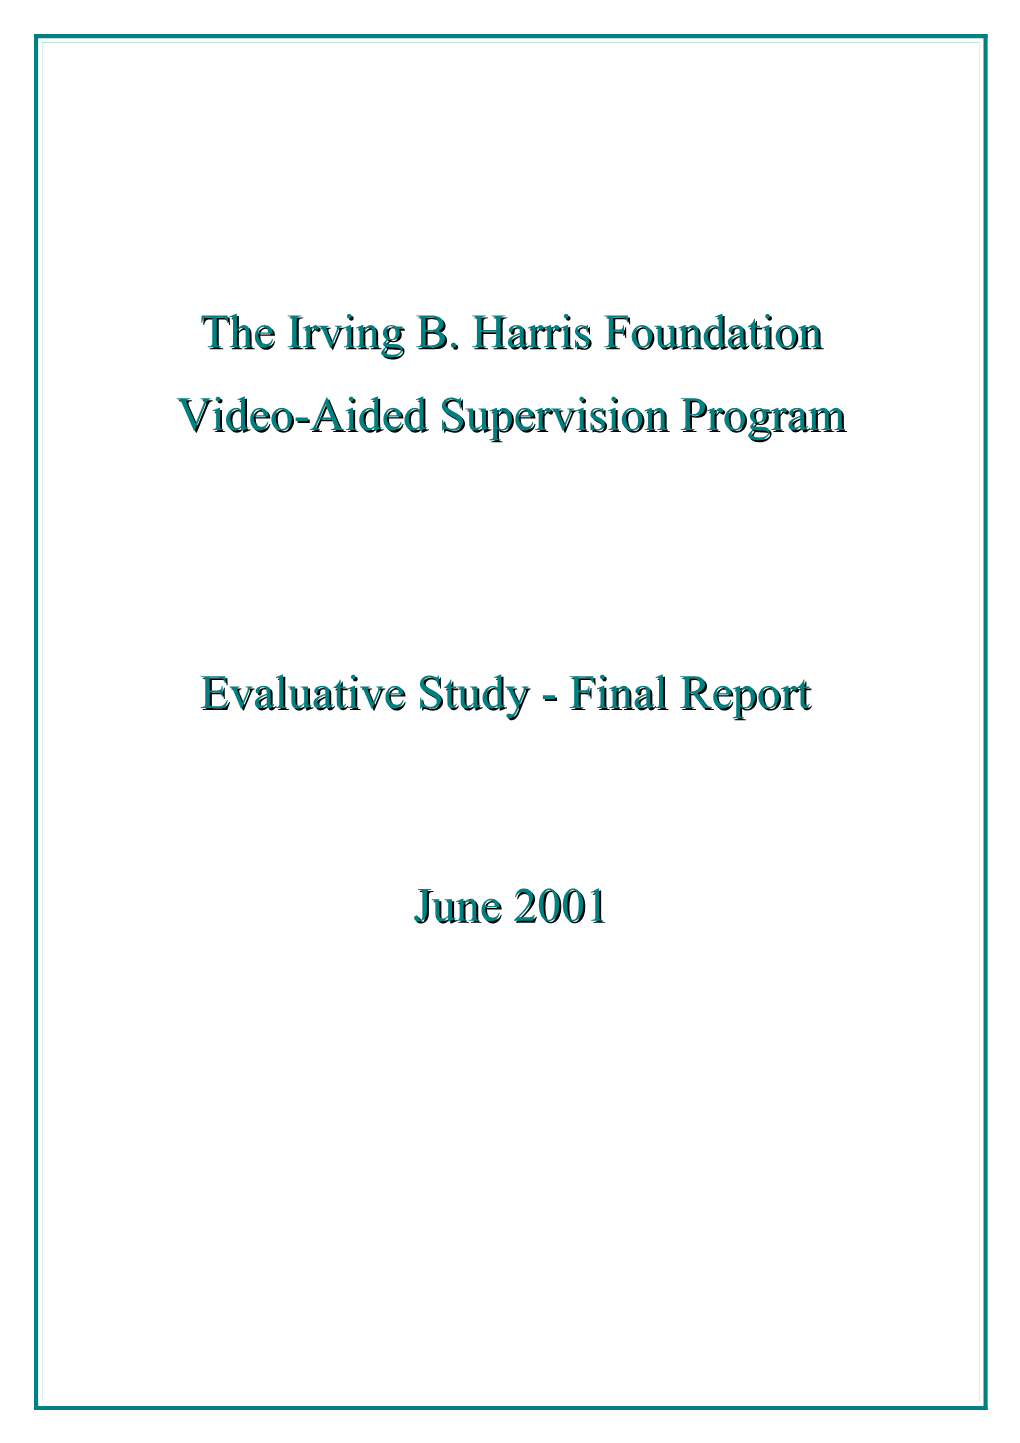 The Irving B. Harris Foundation